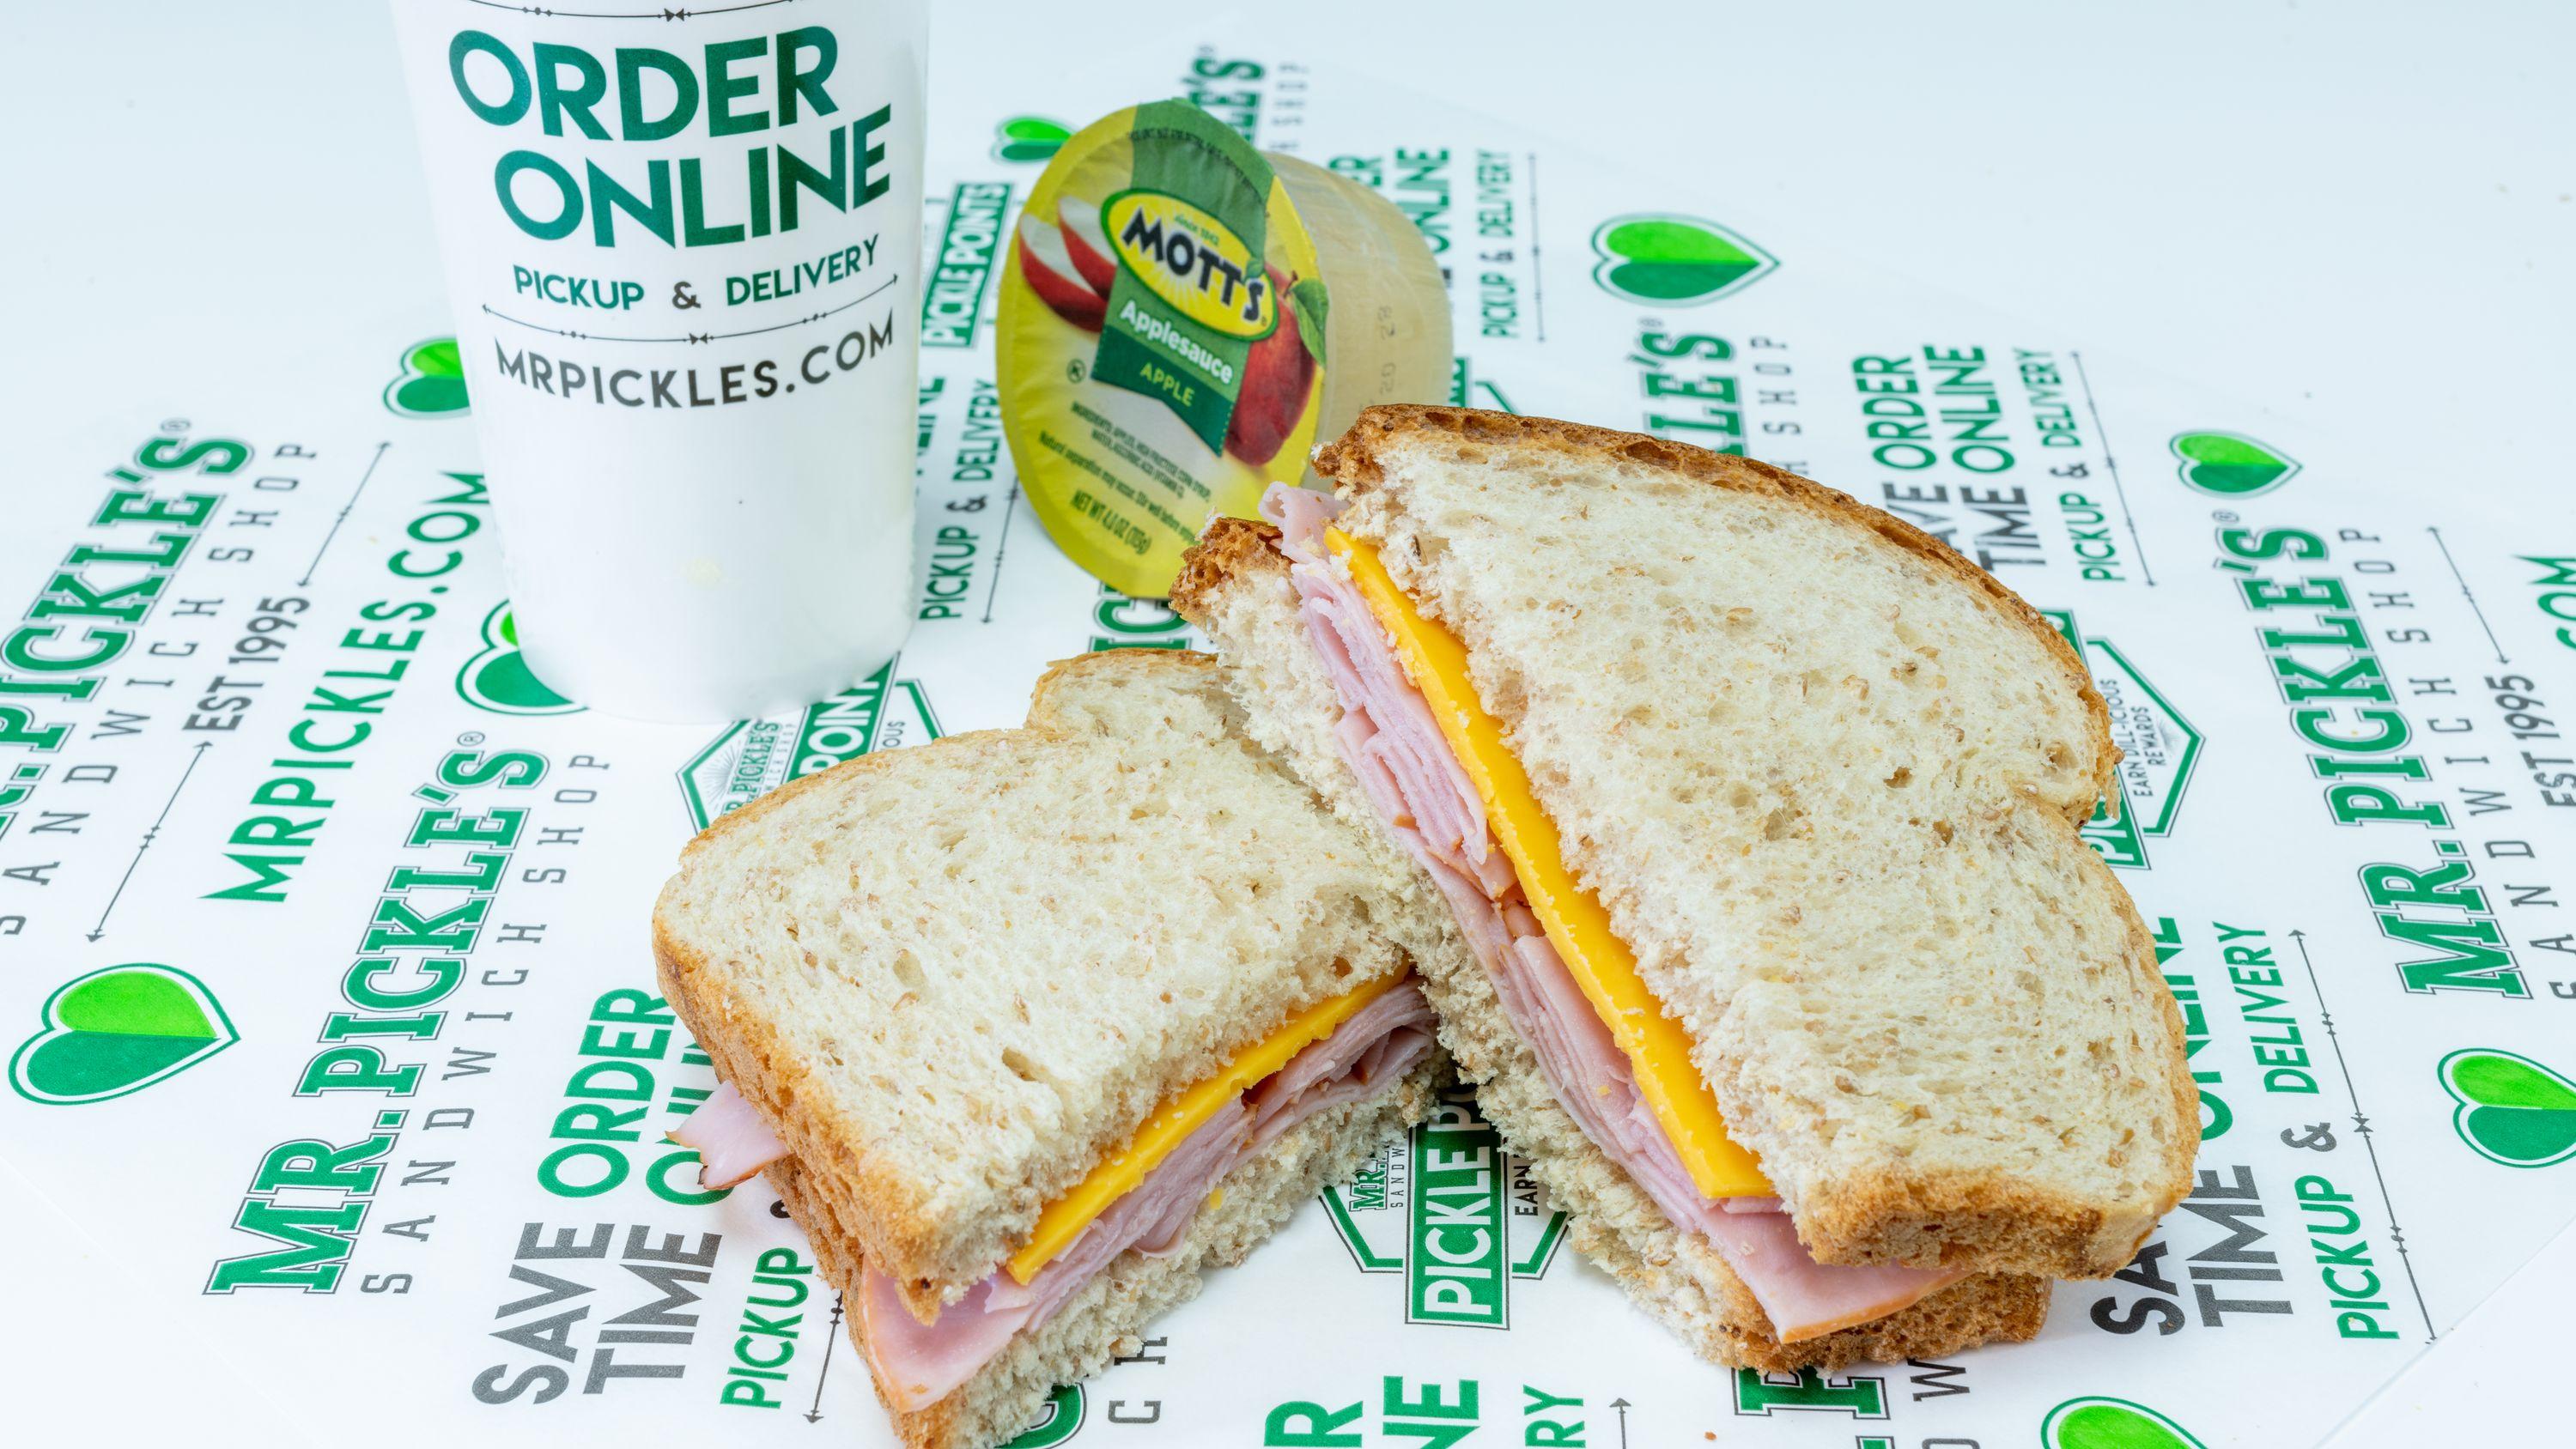 Mr. Pickle's Sandwich Shop now open in central Scottsdale